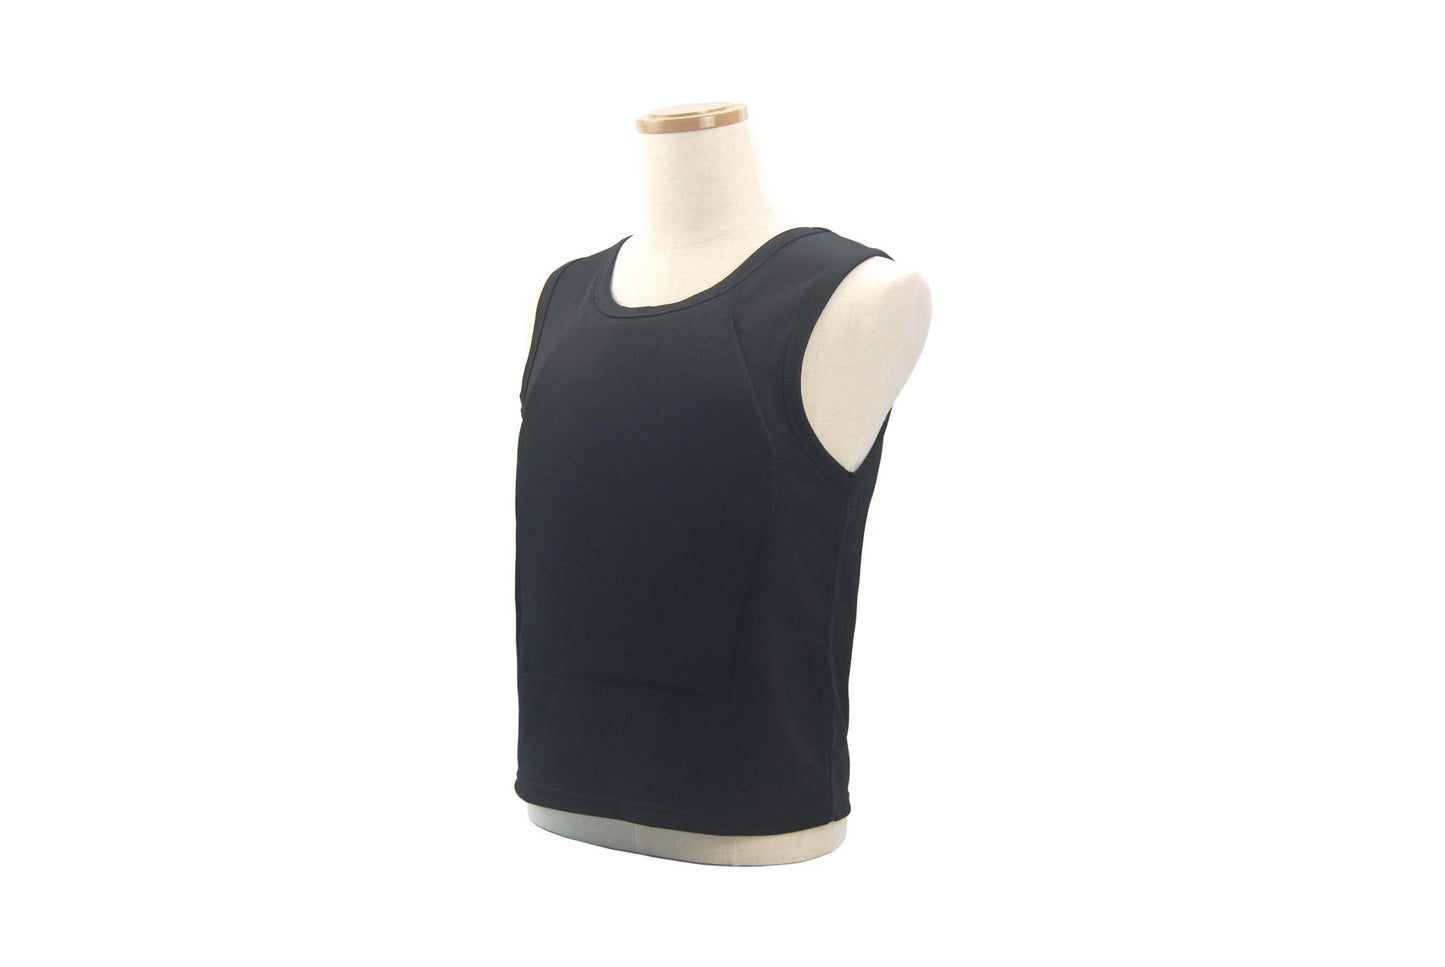 CompassArmor Ultra Thin Kevlar Body Armor T shirt Vest Level 3A